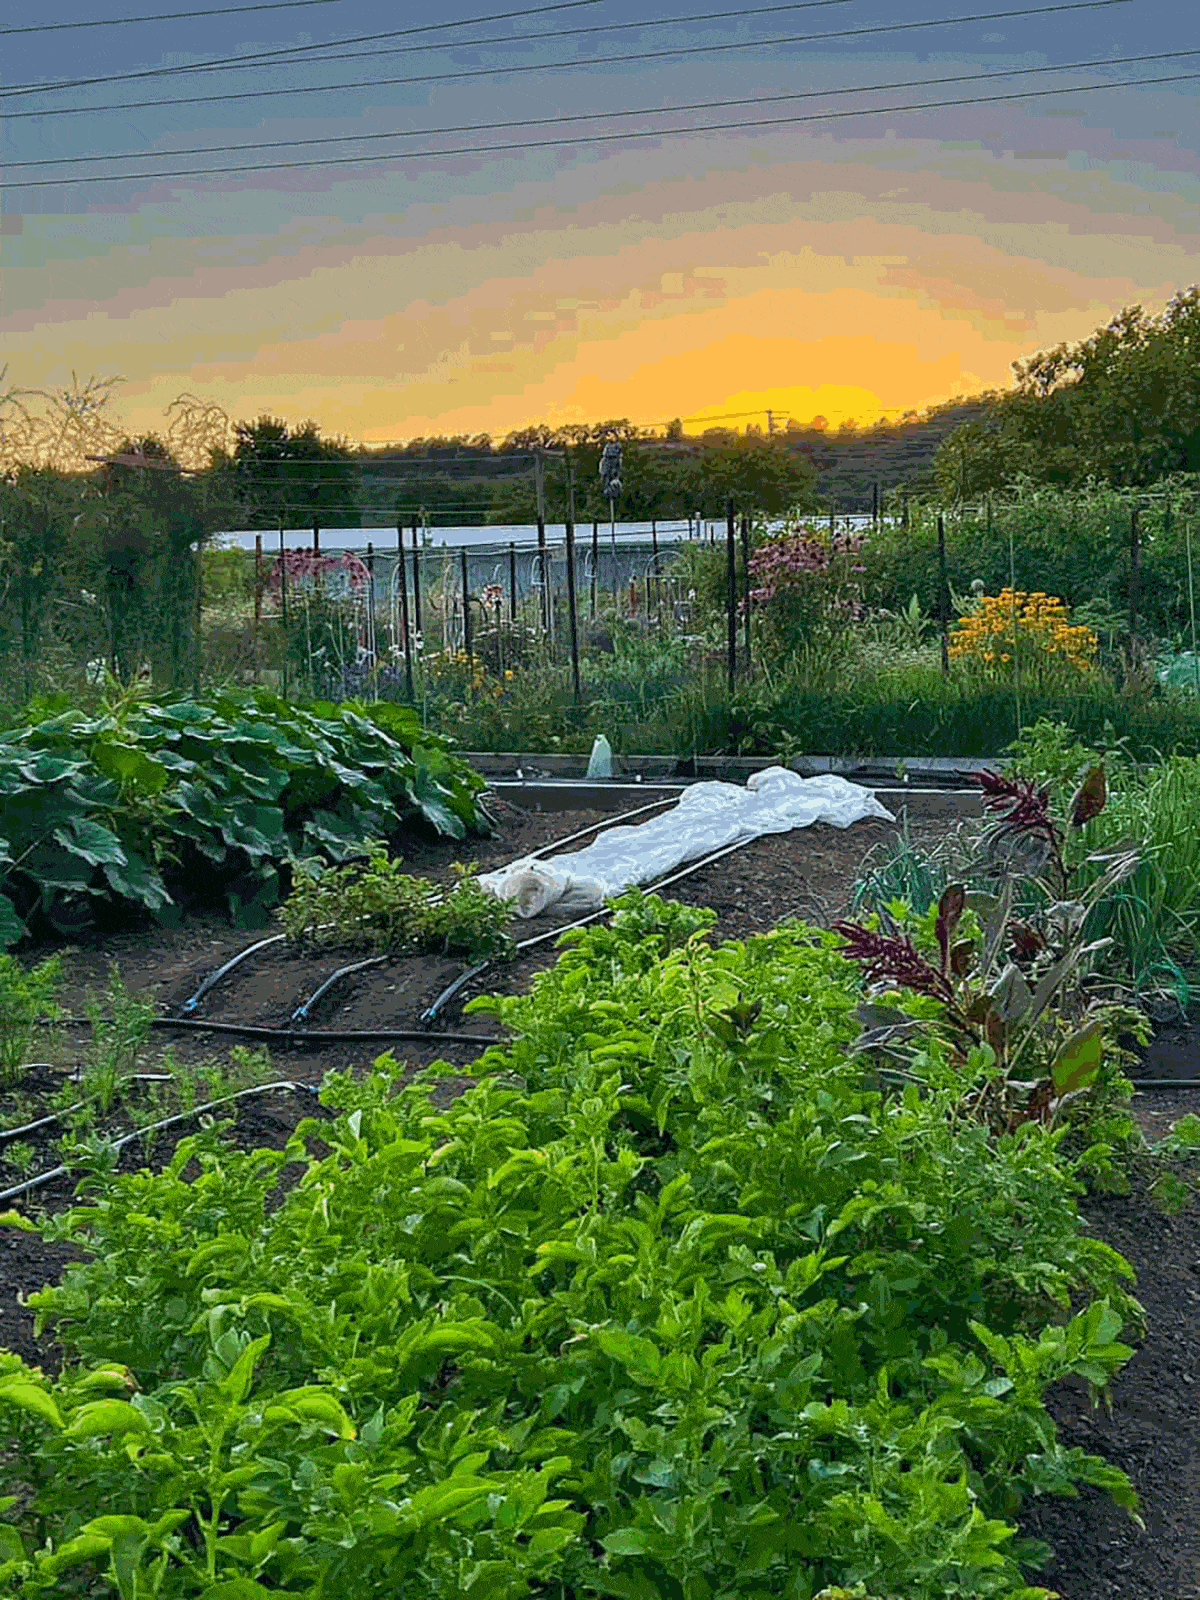 Vegetable garden beds at sunset.